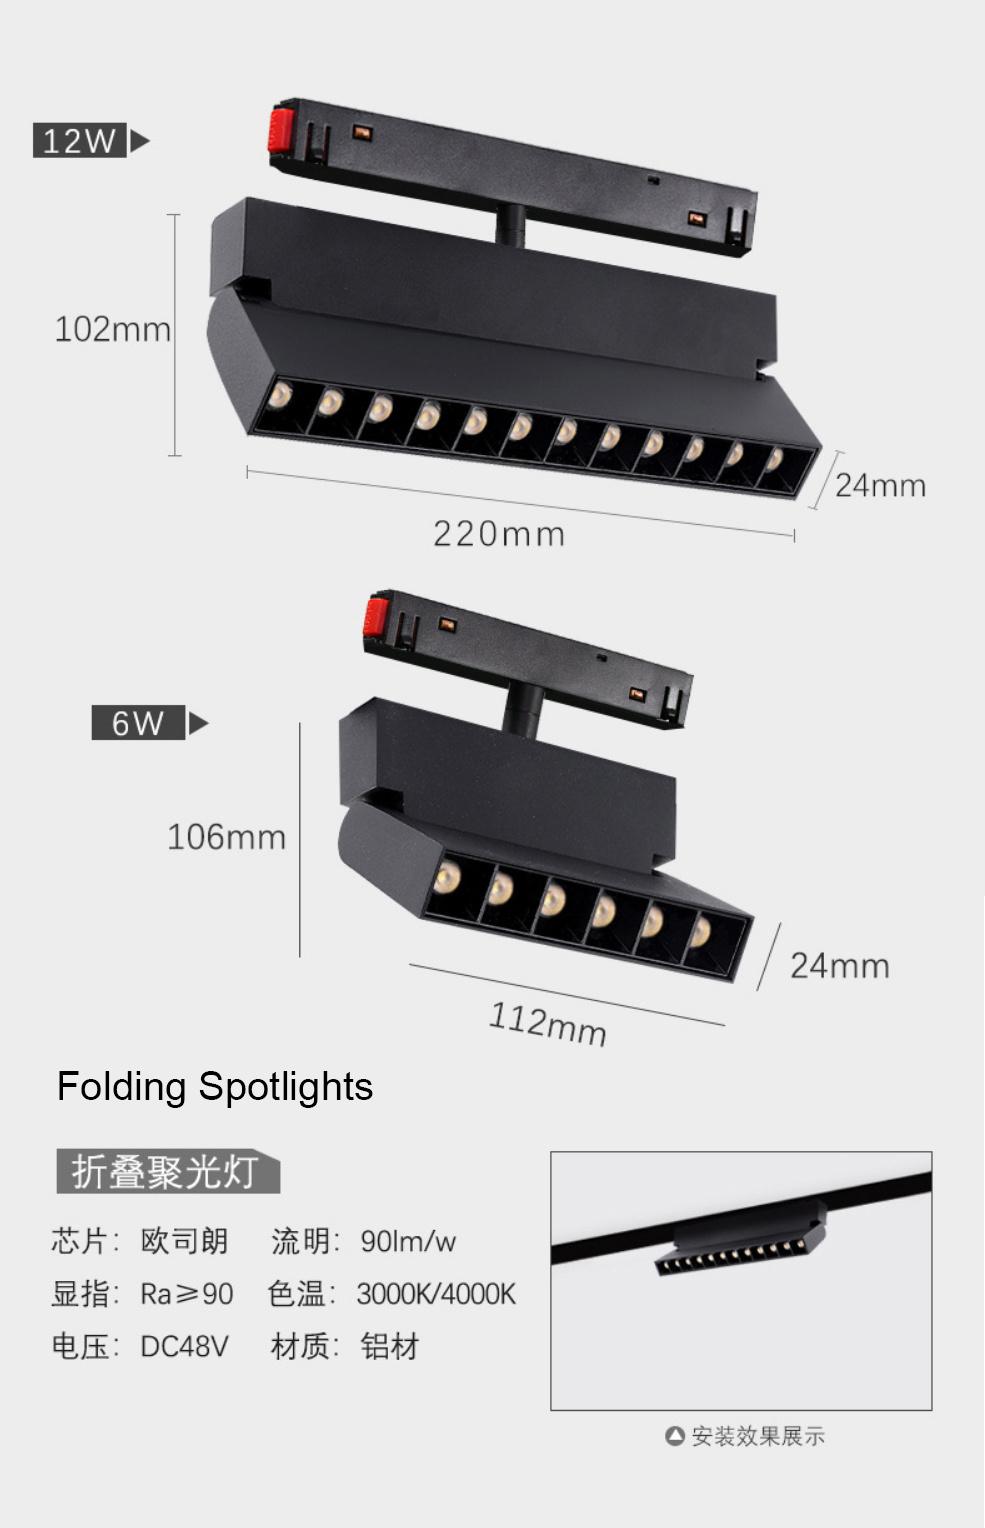 12W-Floodlight for DC48V Safe Touch Track Light 23mm Magnetic Lamp